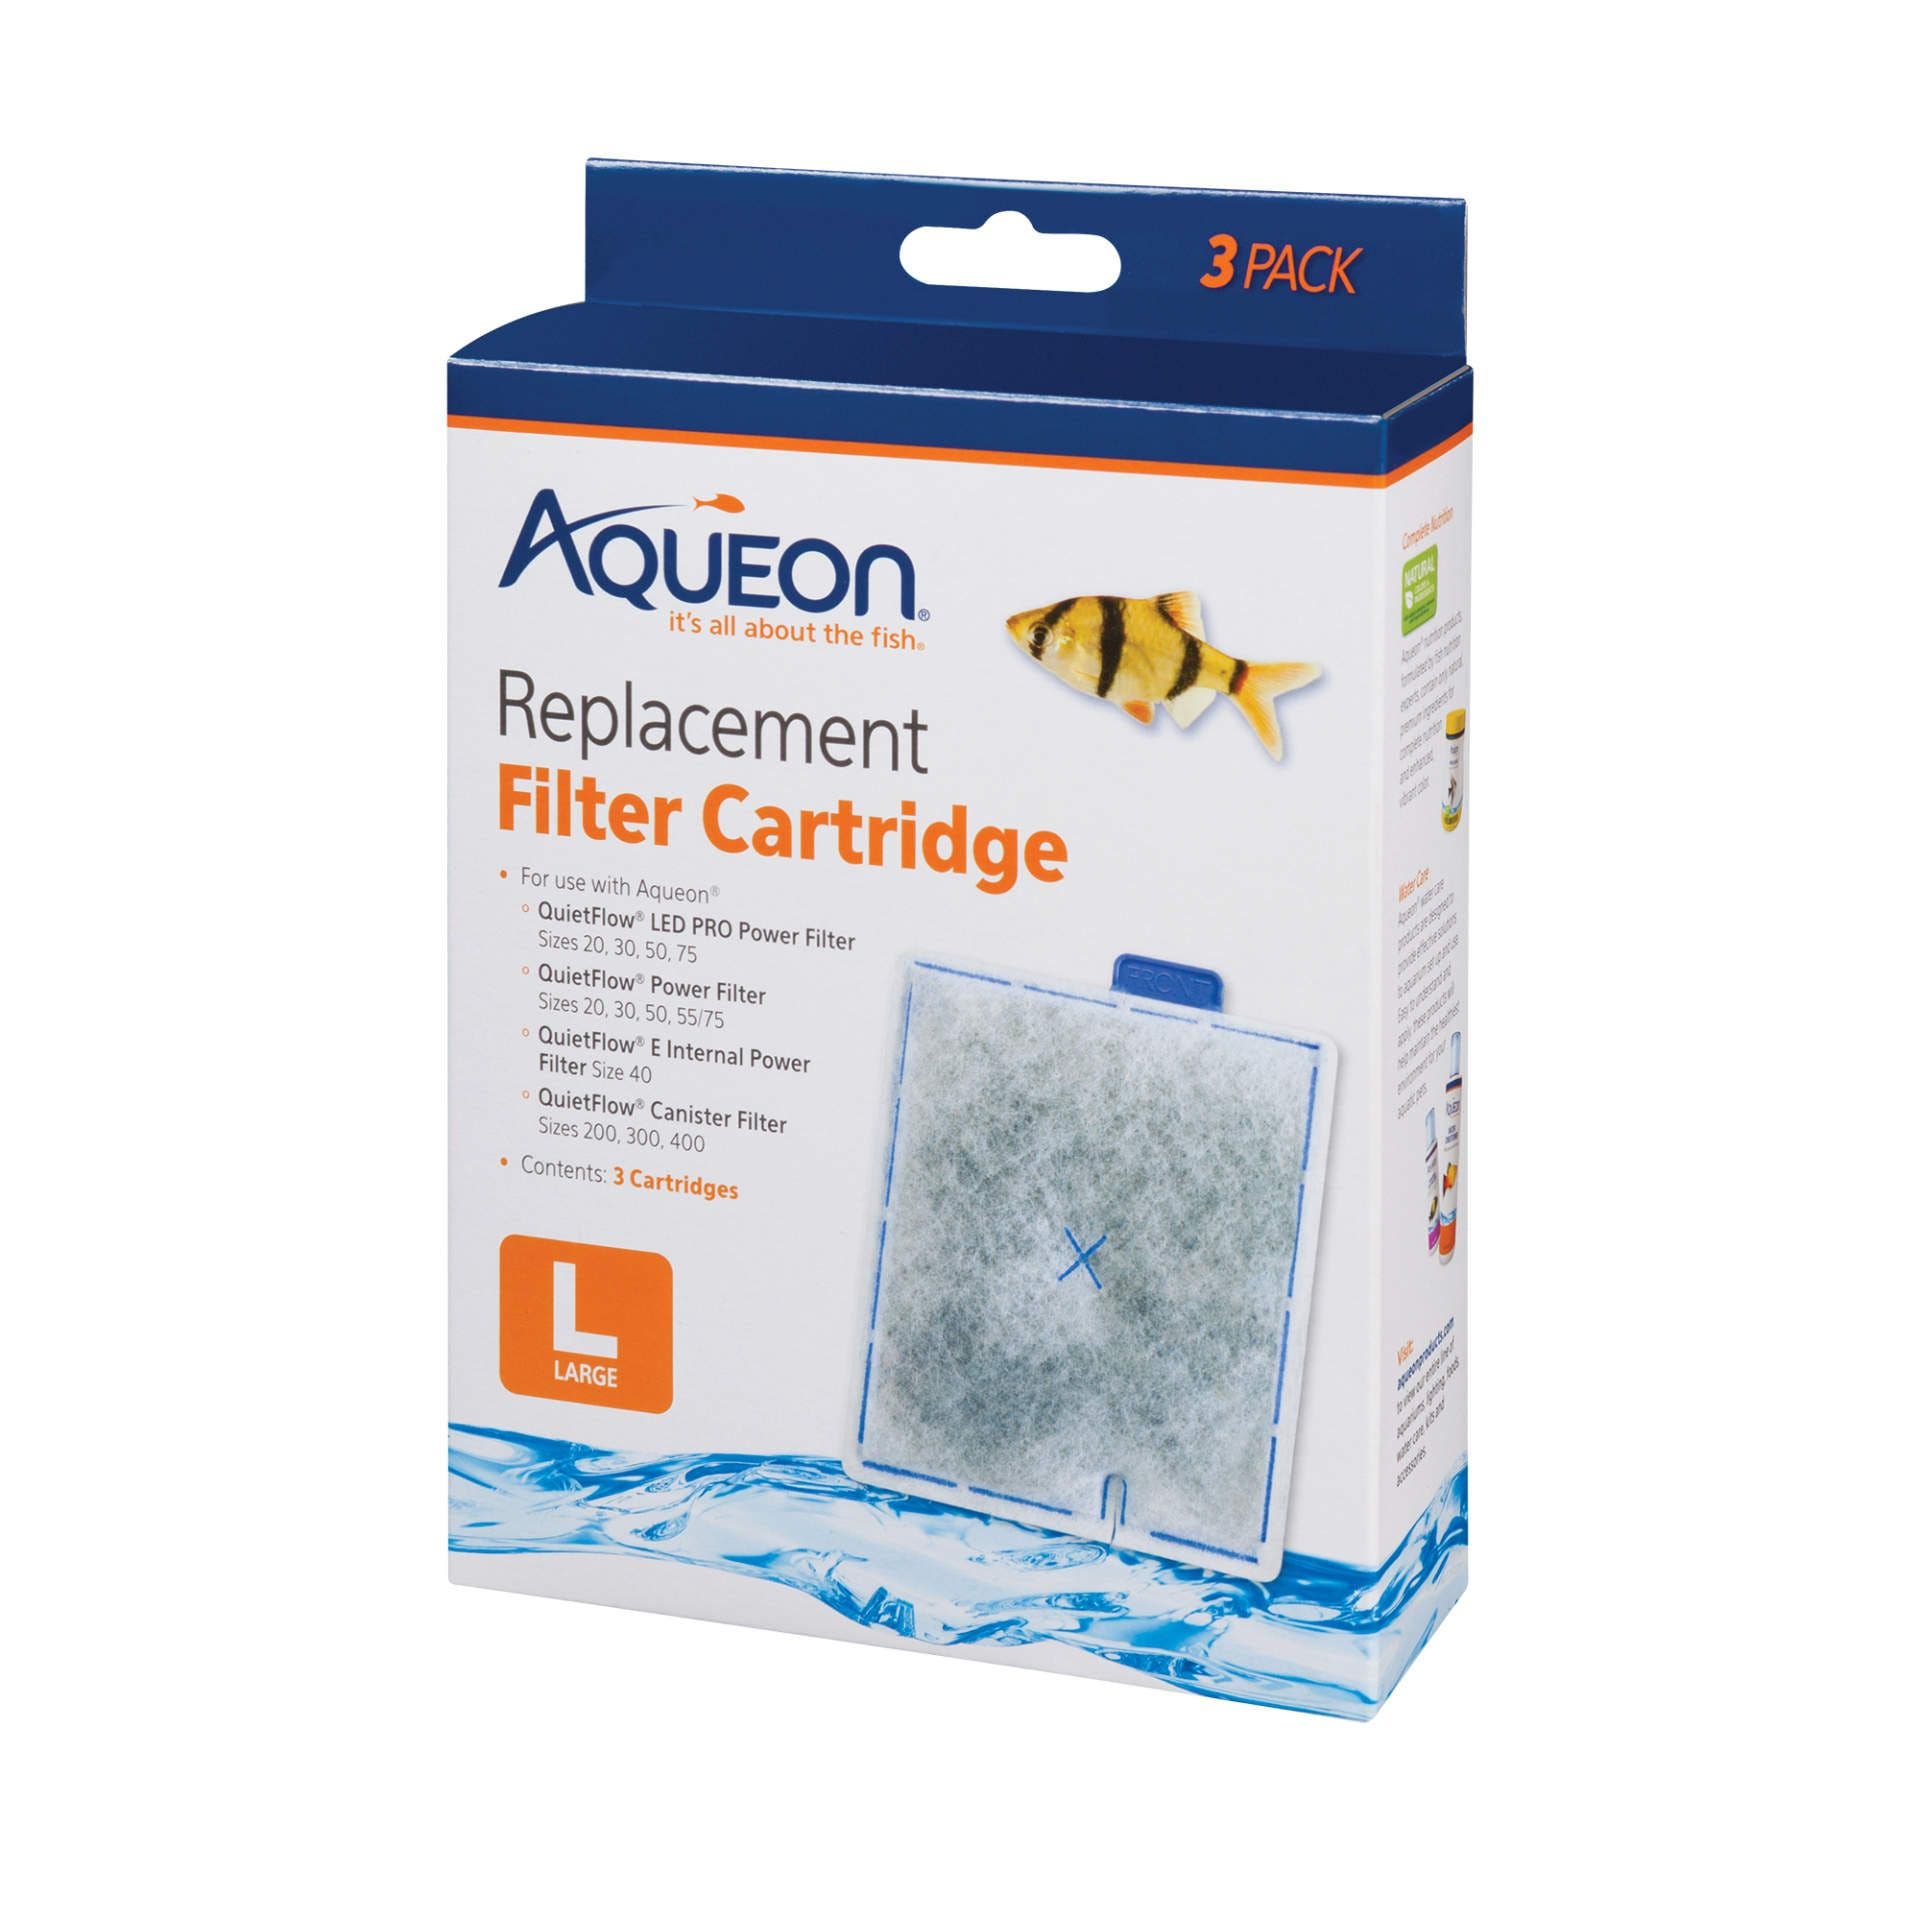 Aqueon large cartridge 3 pack fish